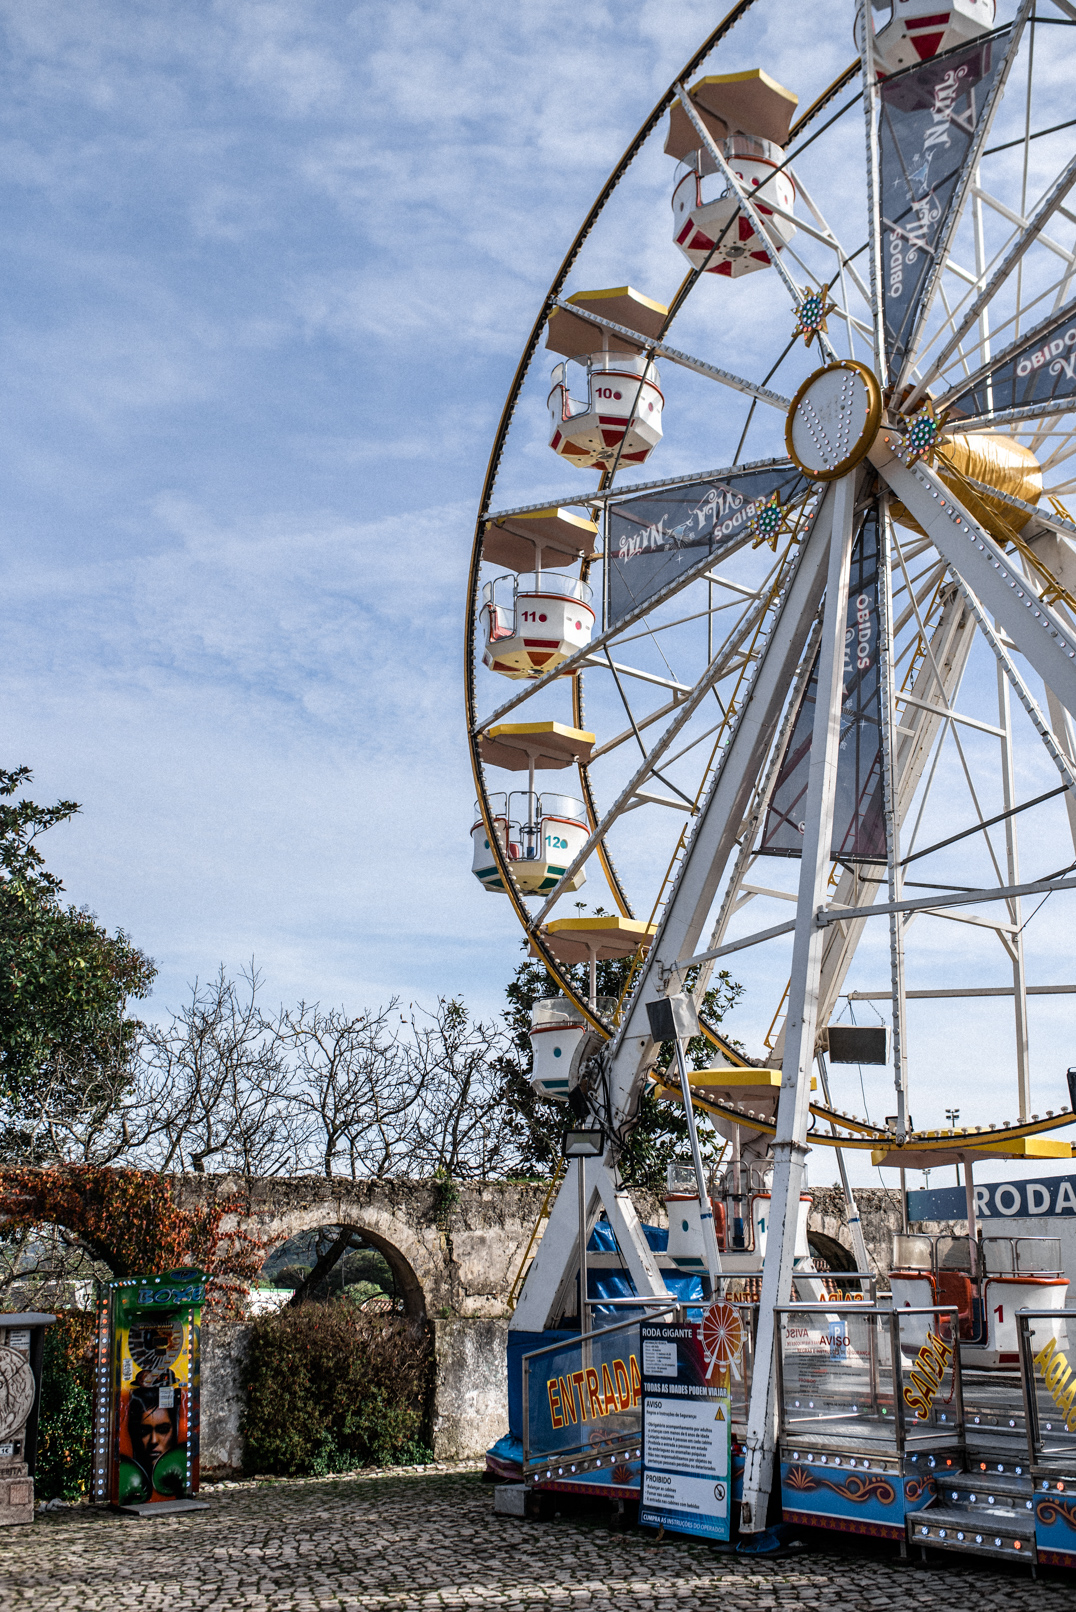 Óbidos Christmas Market - Ferris wheel